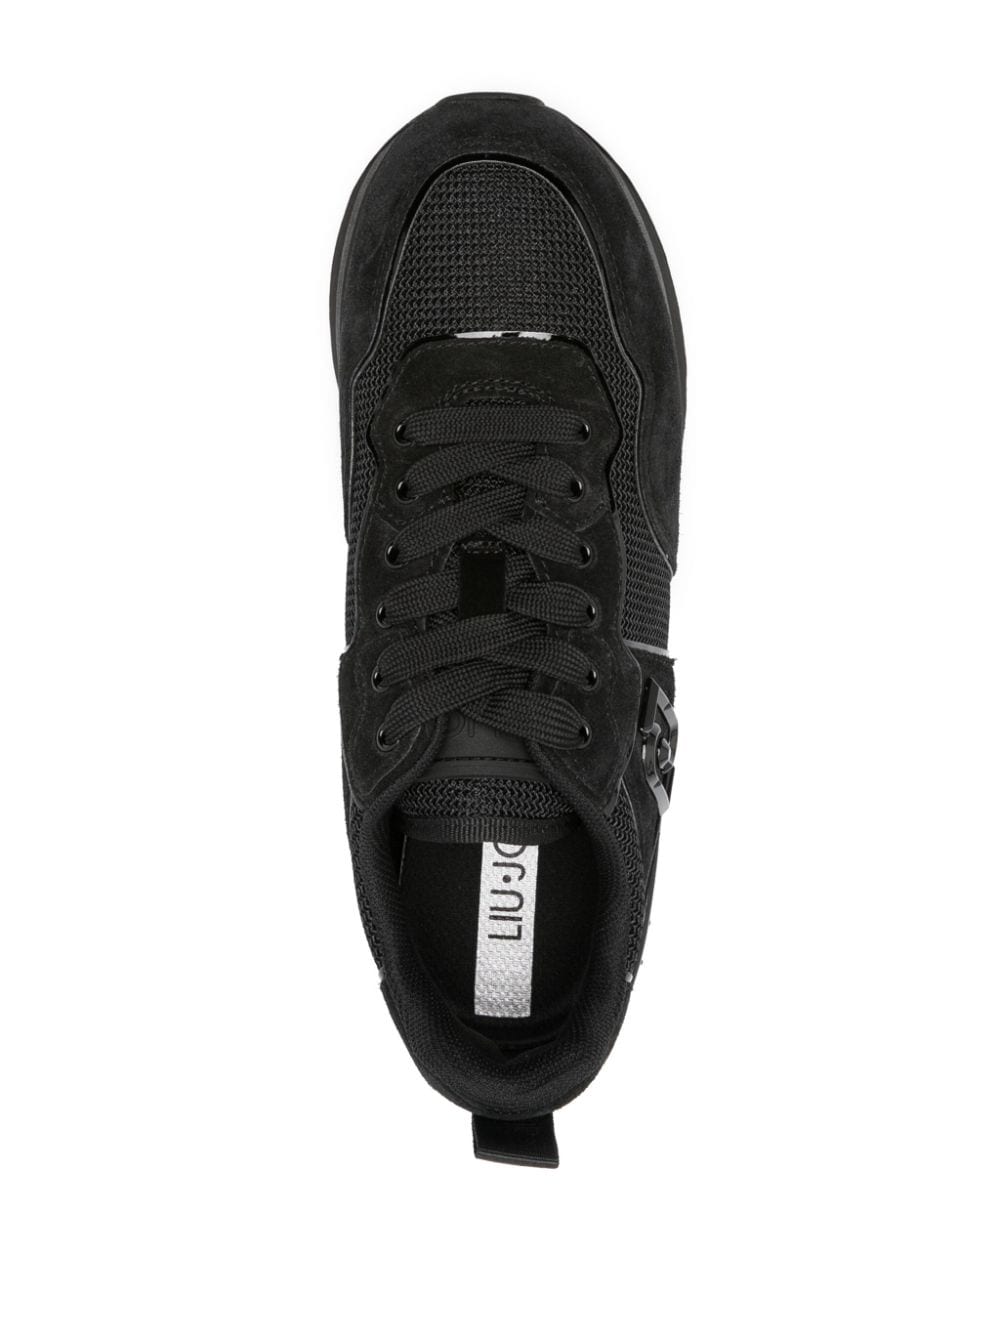 LIU JO Maxi Wonder 52 flatform sneakers Black